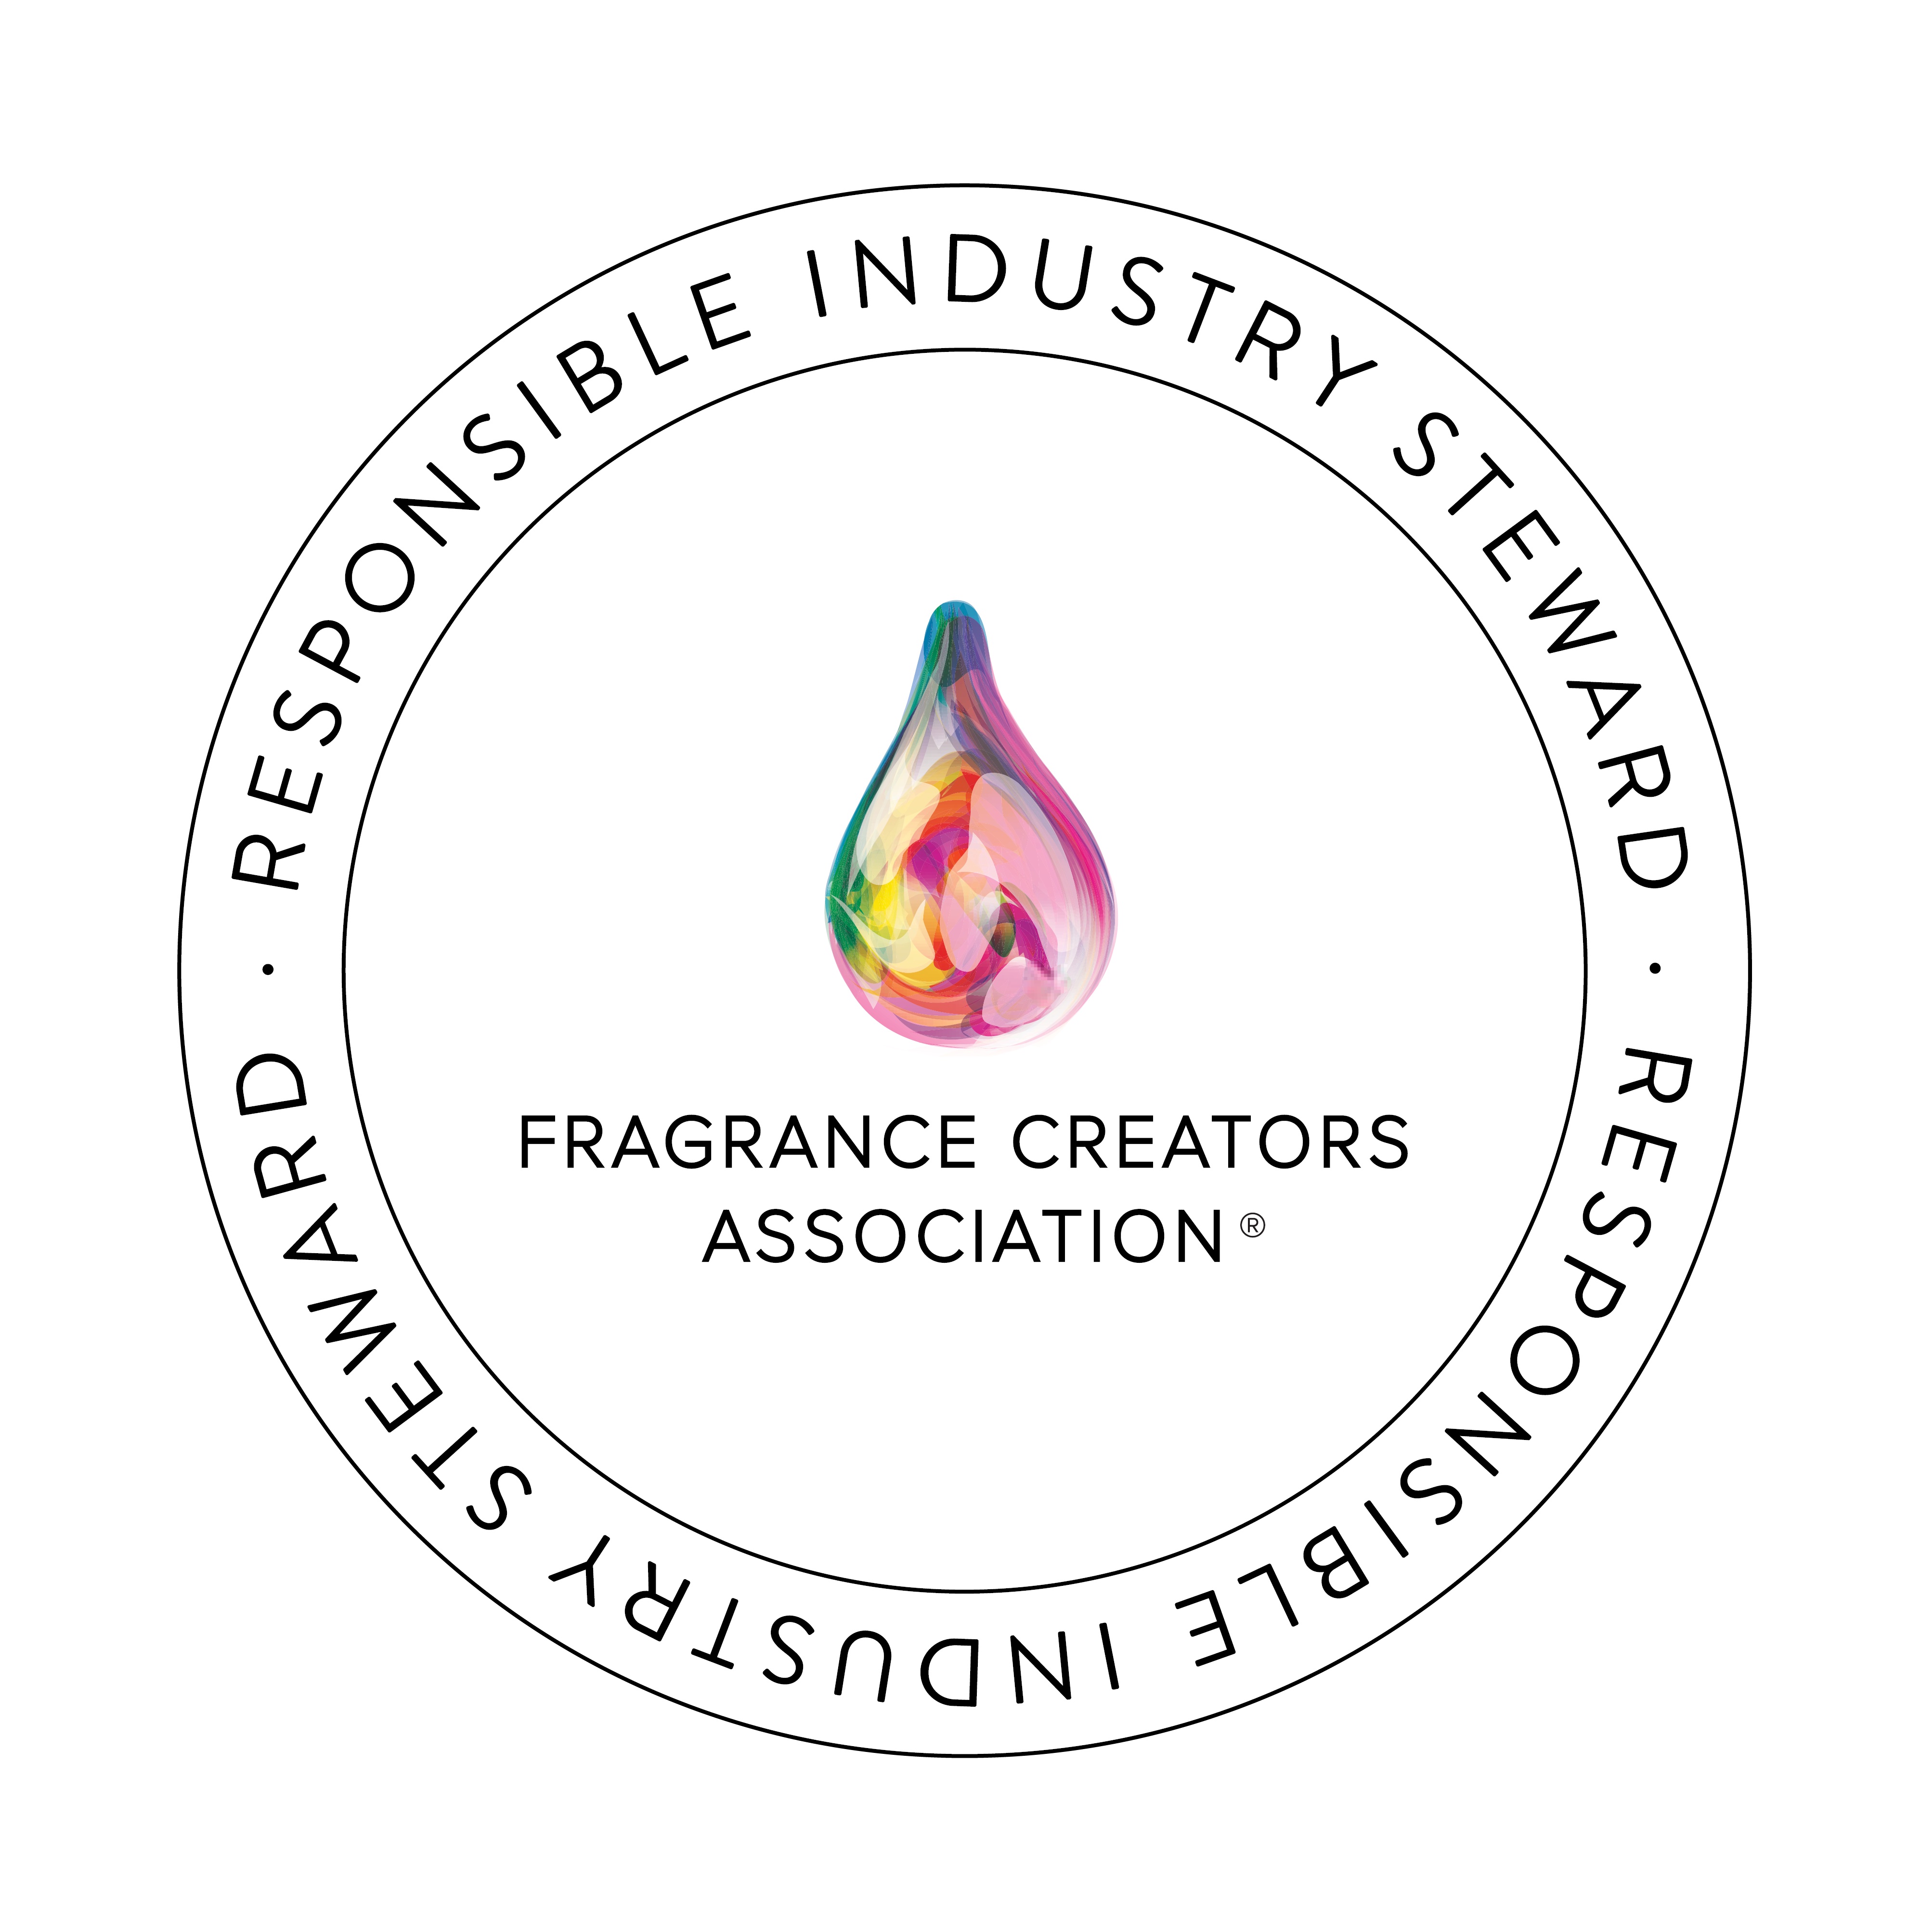 Fragrance Creators Association Launches Responsible